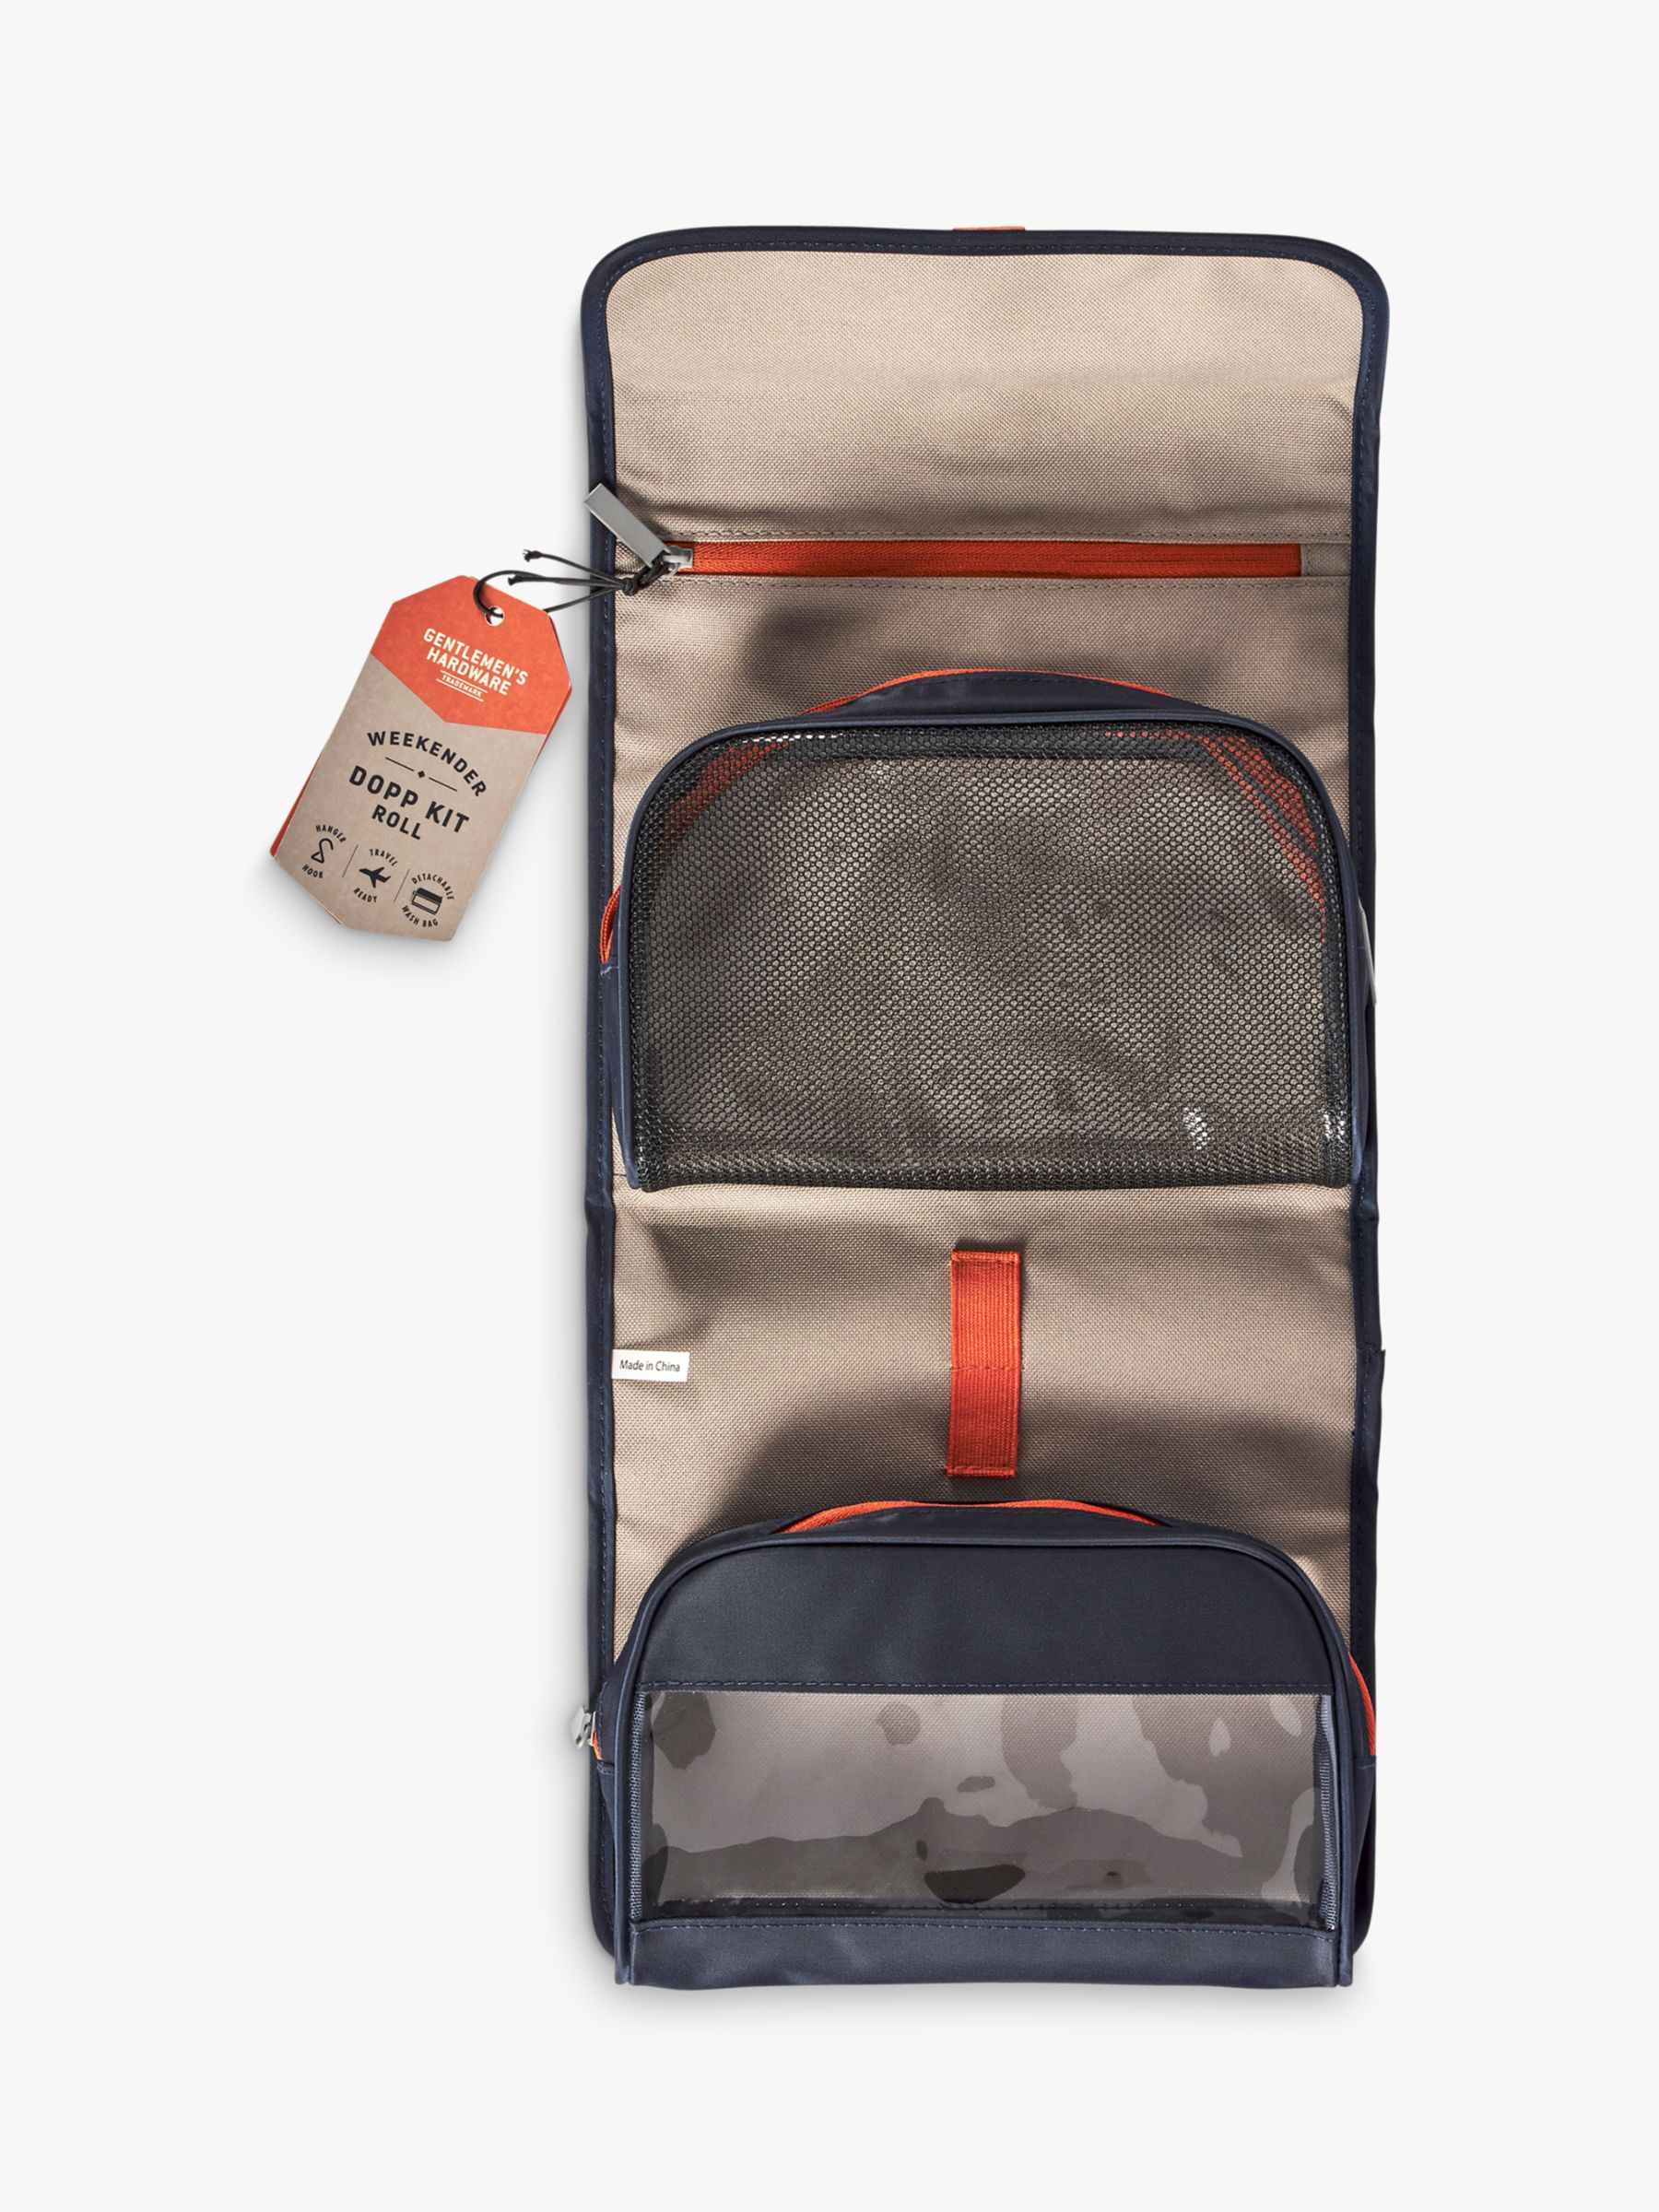 Gentlemen's Hardware Roll-Up Travel Bag at John Lewis & Partners